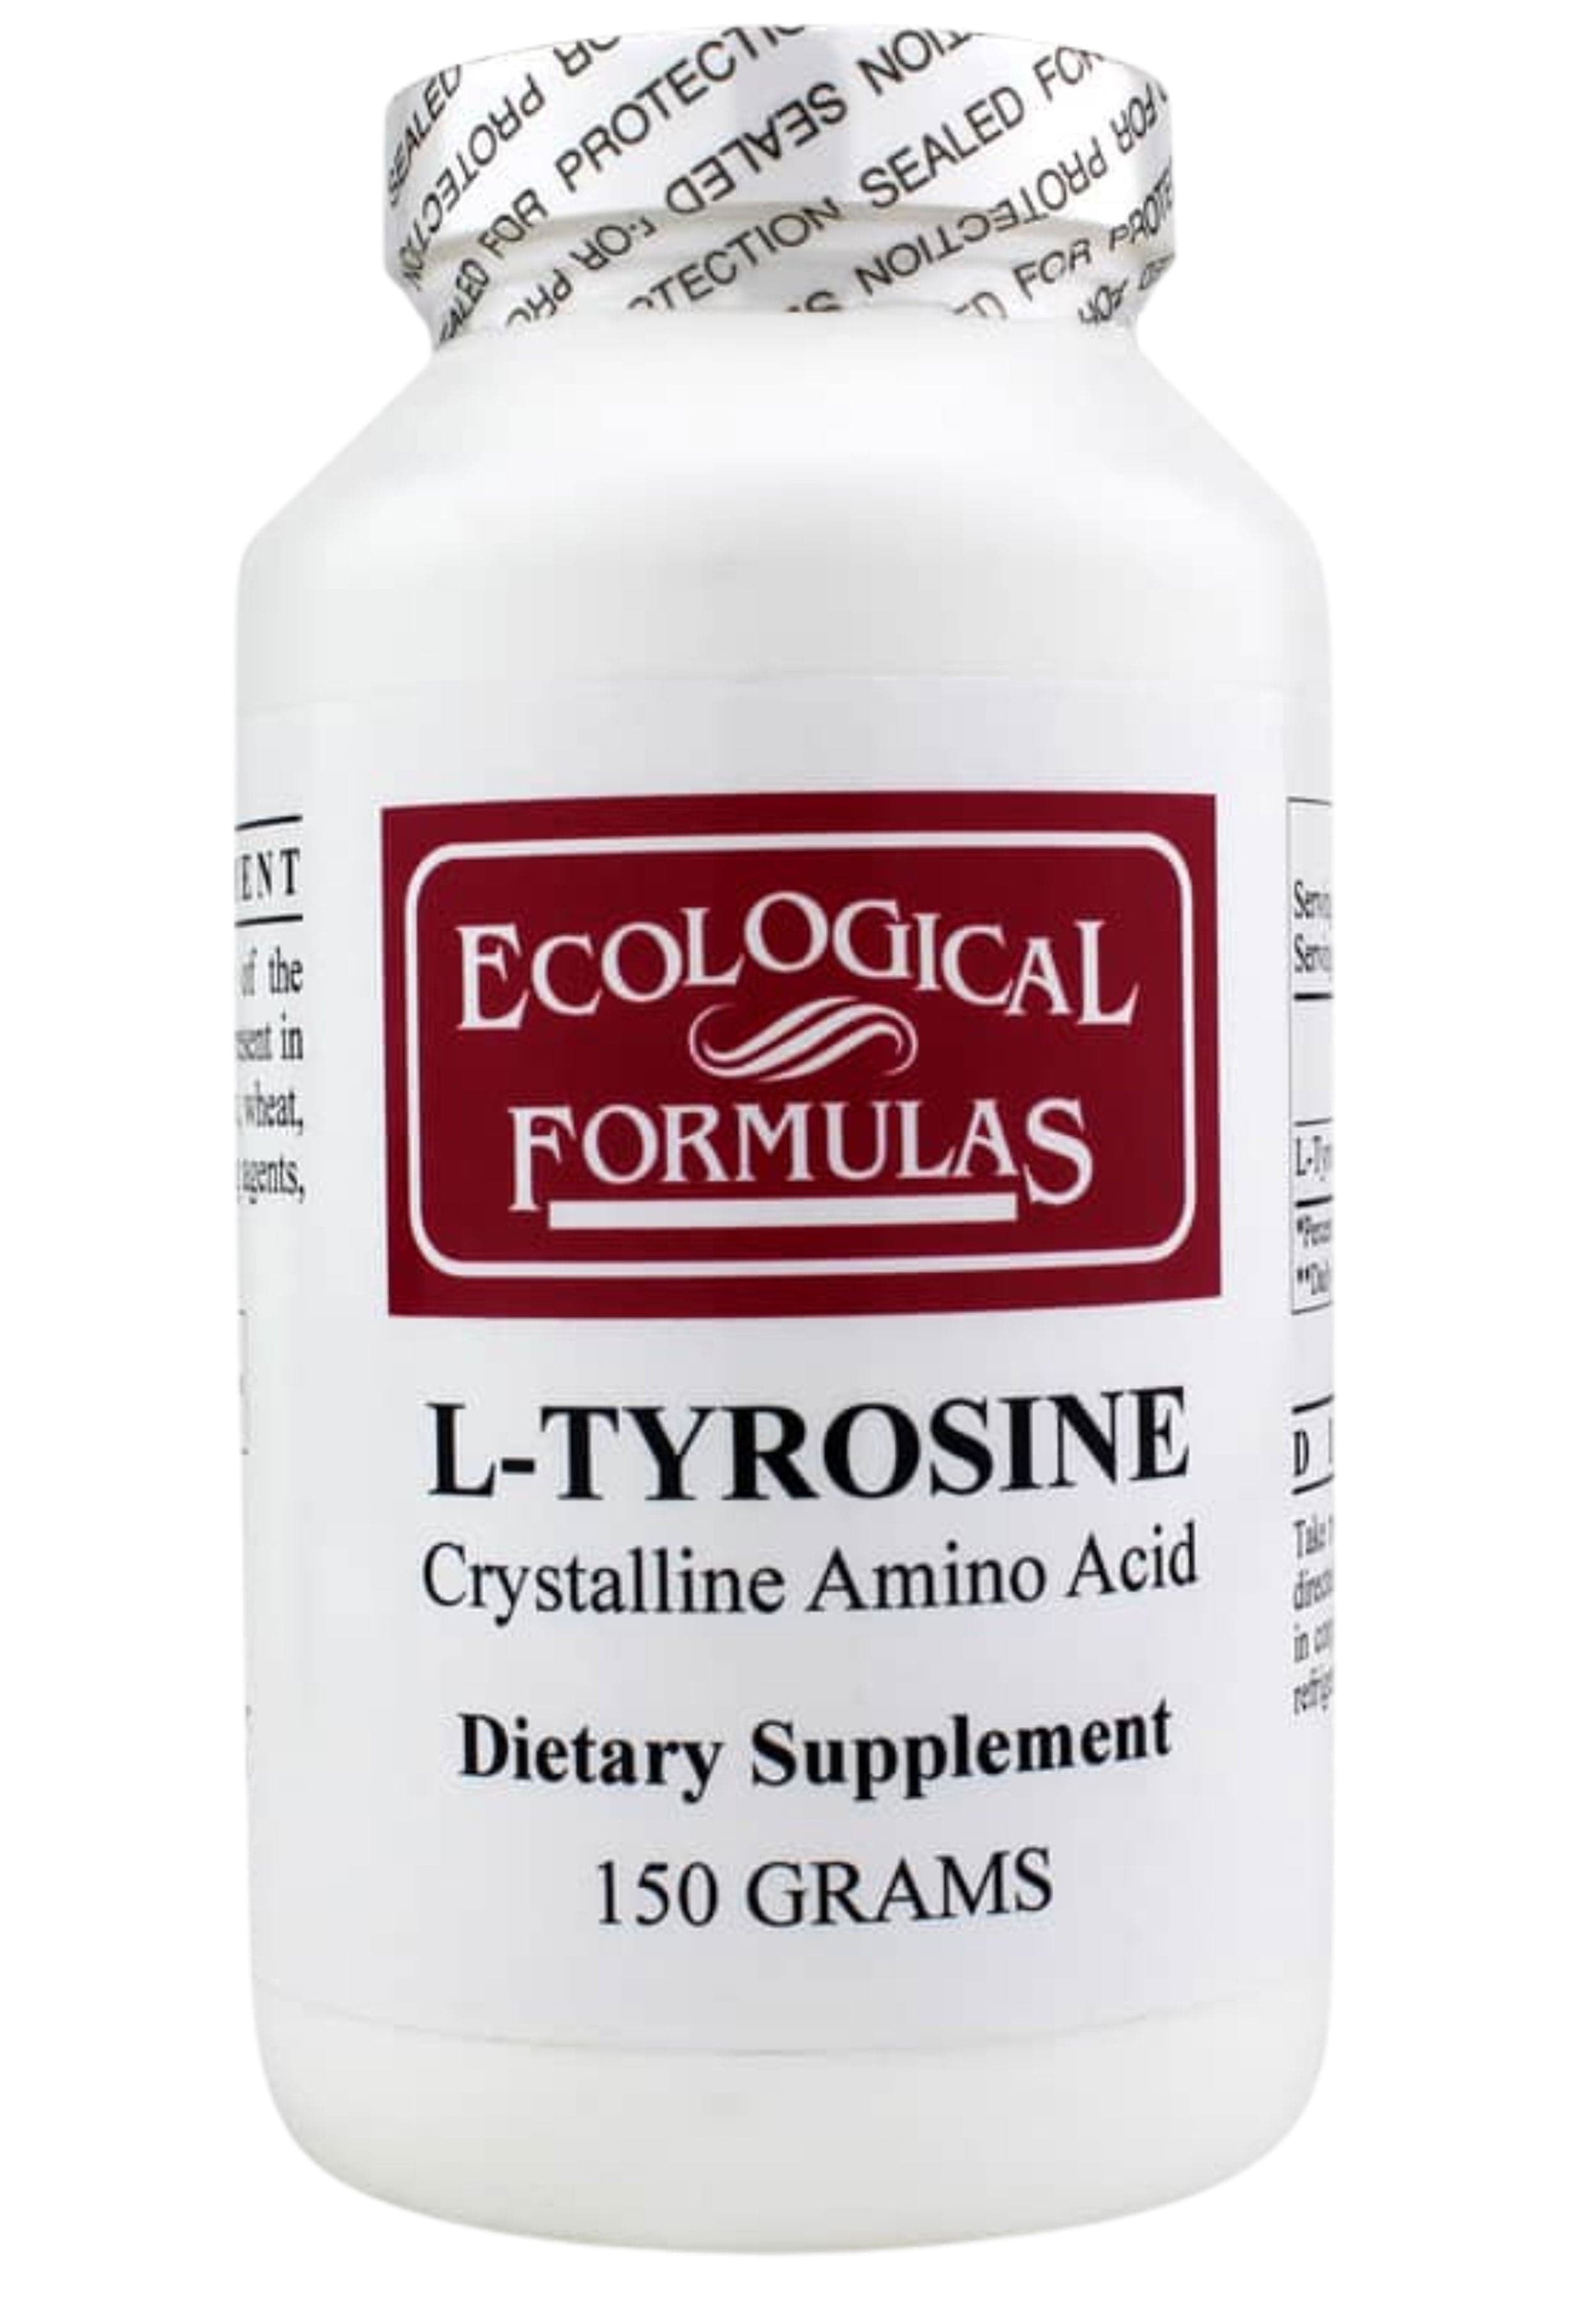 Ecological Formulas/Cardiovascular Research L-Tyrosine